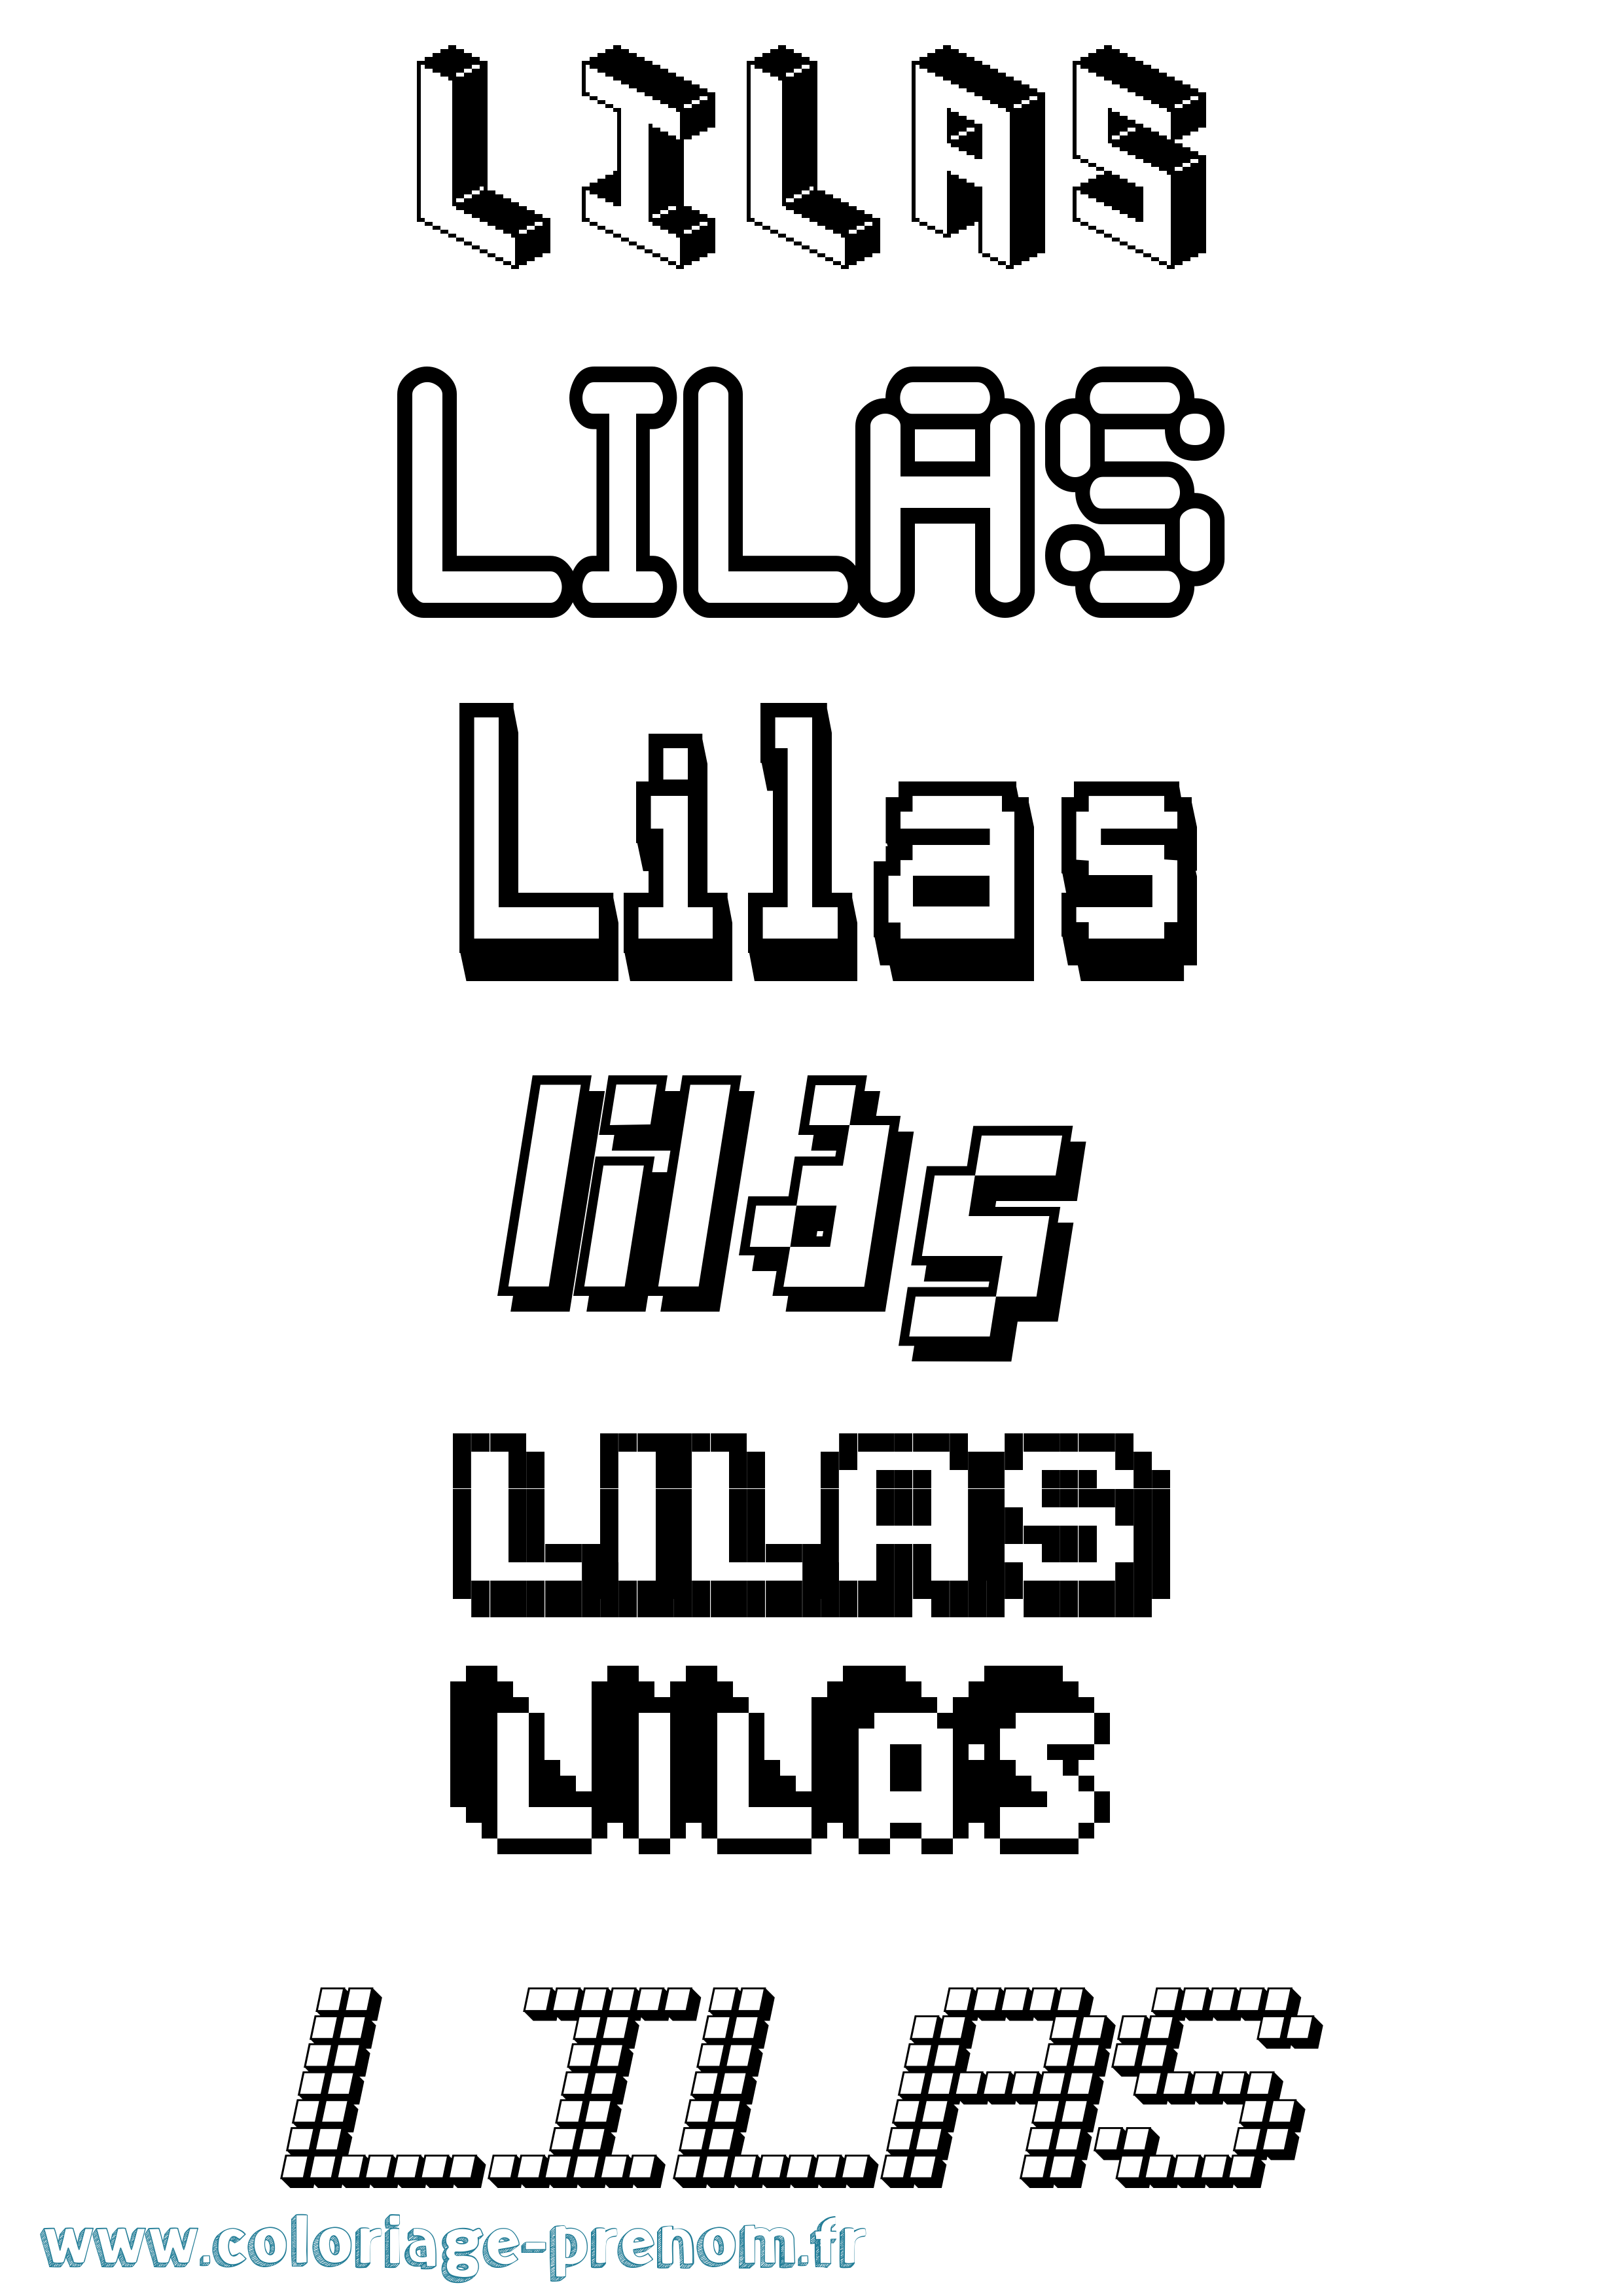 Coloriage prénom Lilas